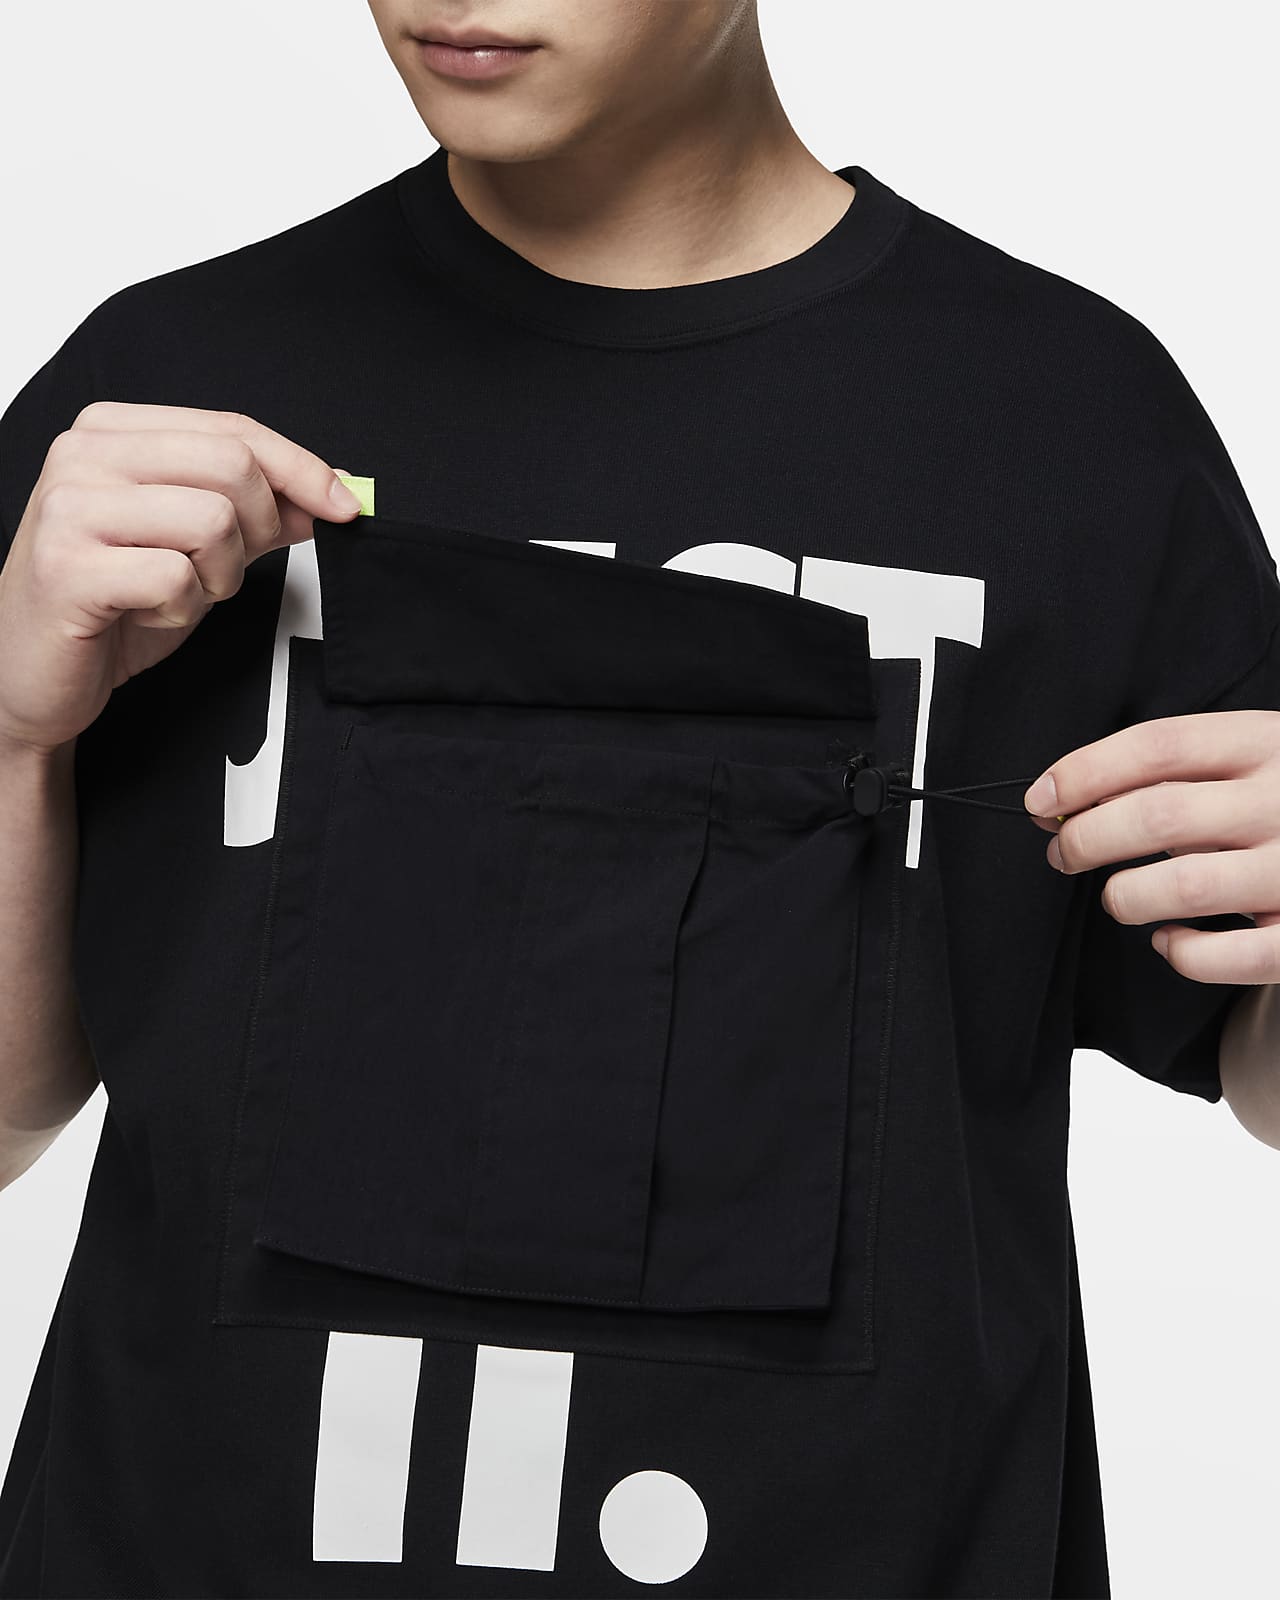 NIKE公式】ナイキ ISPA メンズ JDI Tシャツ.オンラインストア (通販サイト)